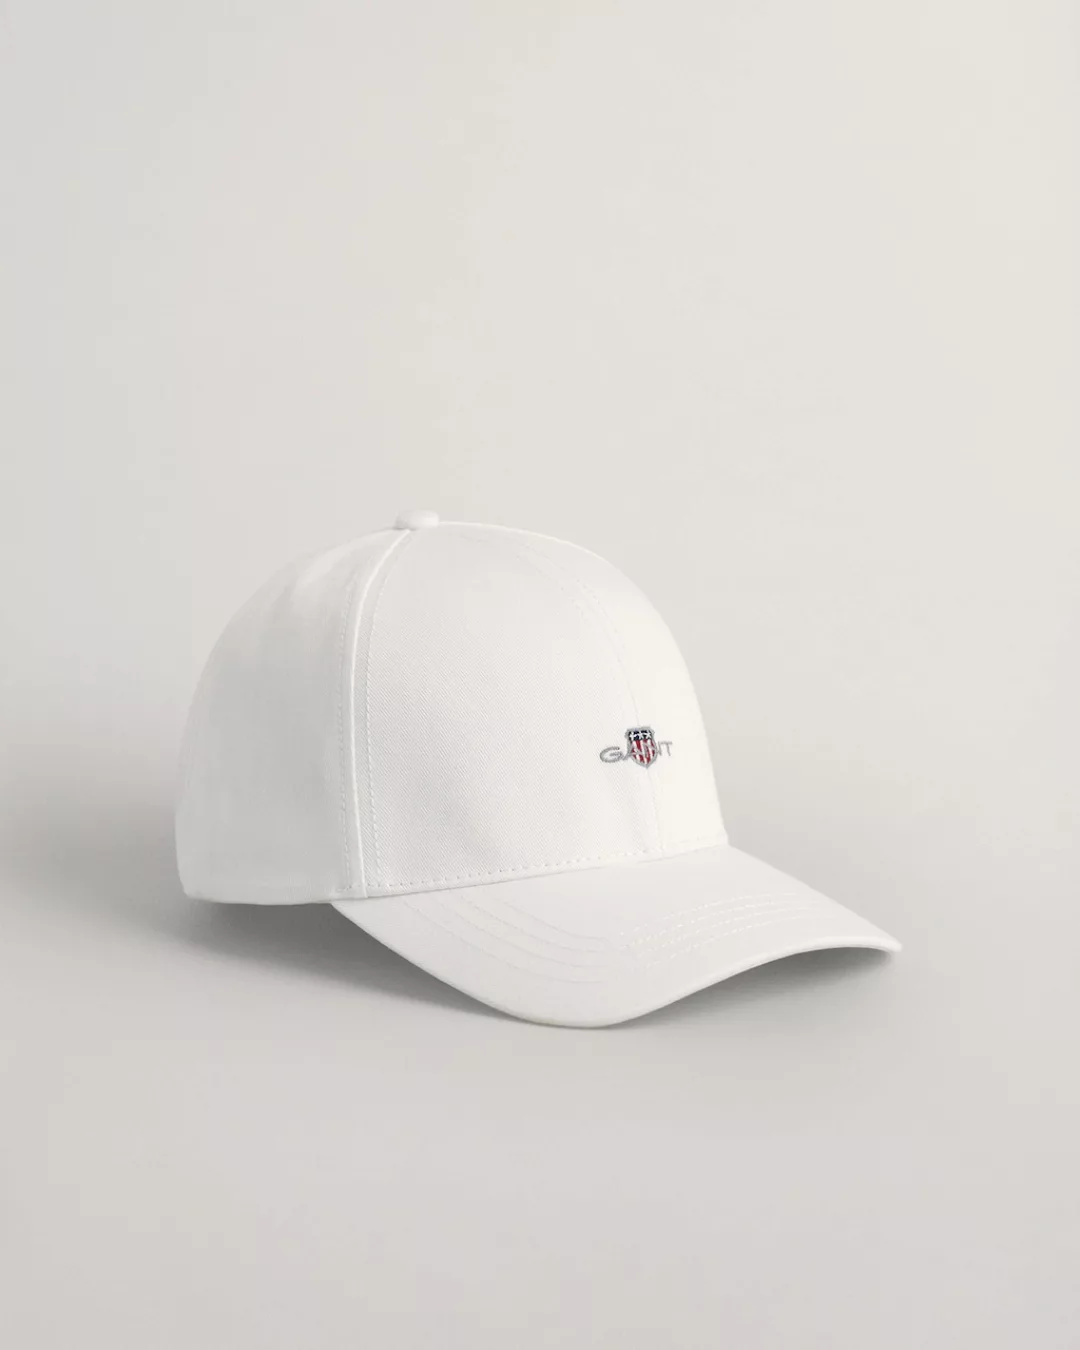 Gant Baseball Cap "Neutral Unisex High Shield Basecap" günstig online kaufen